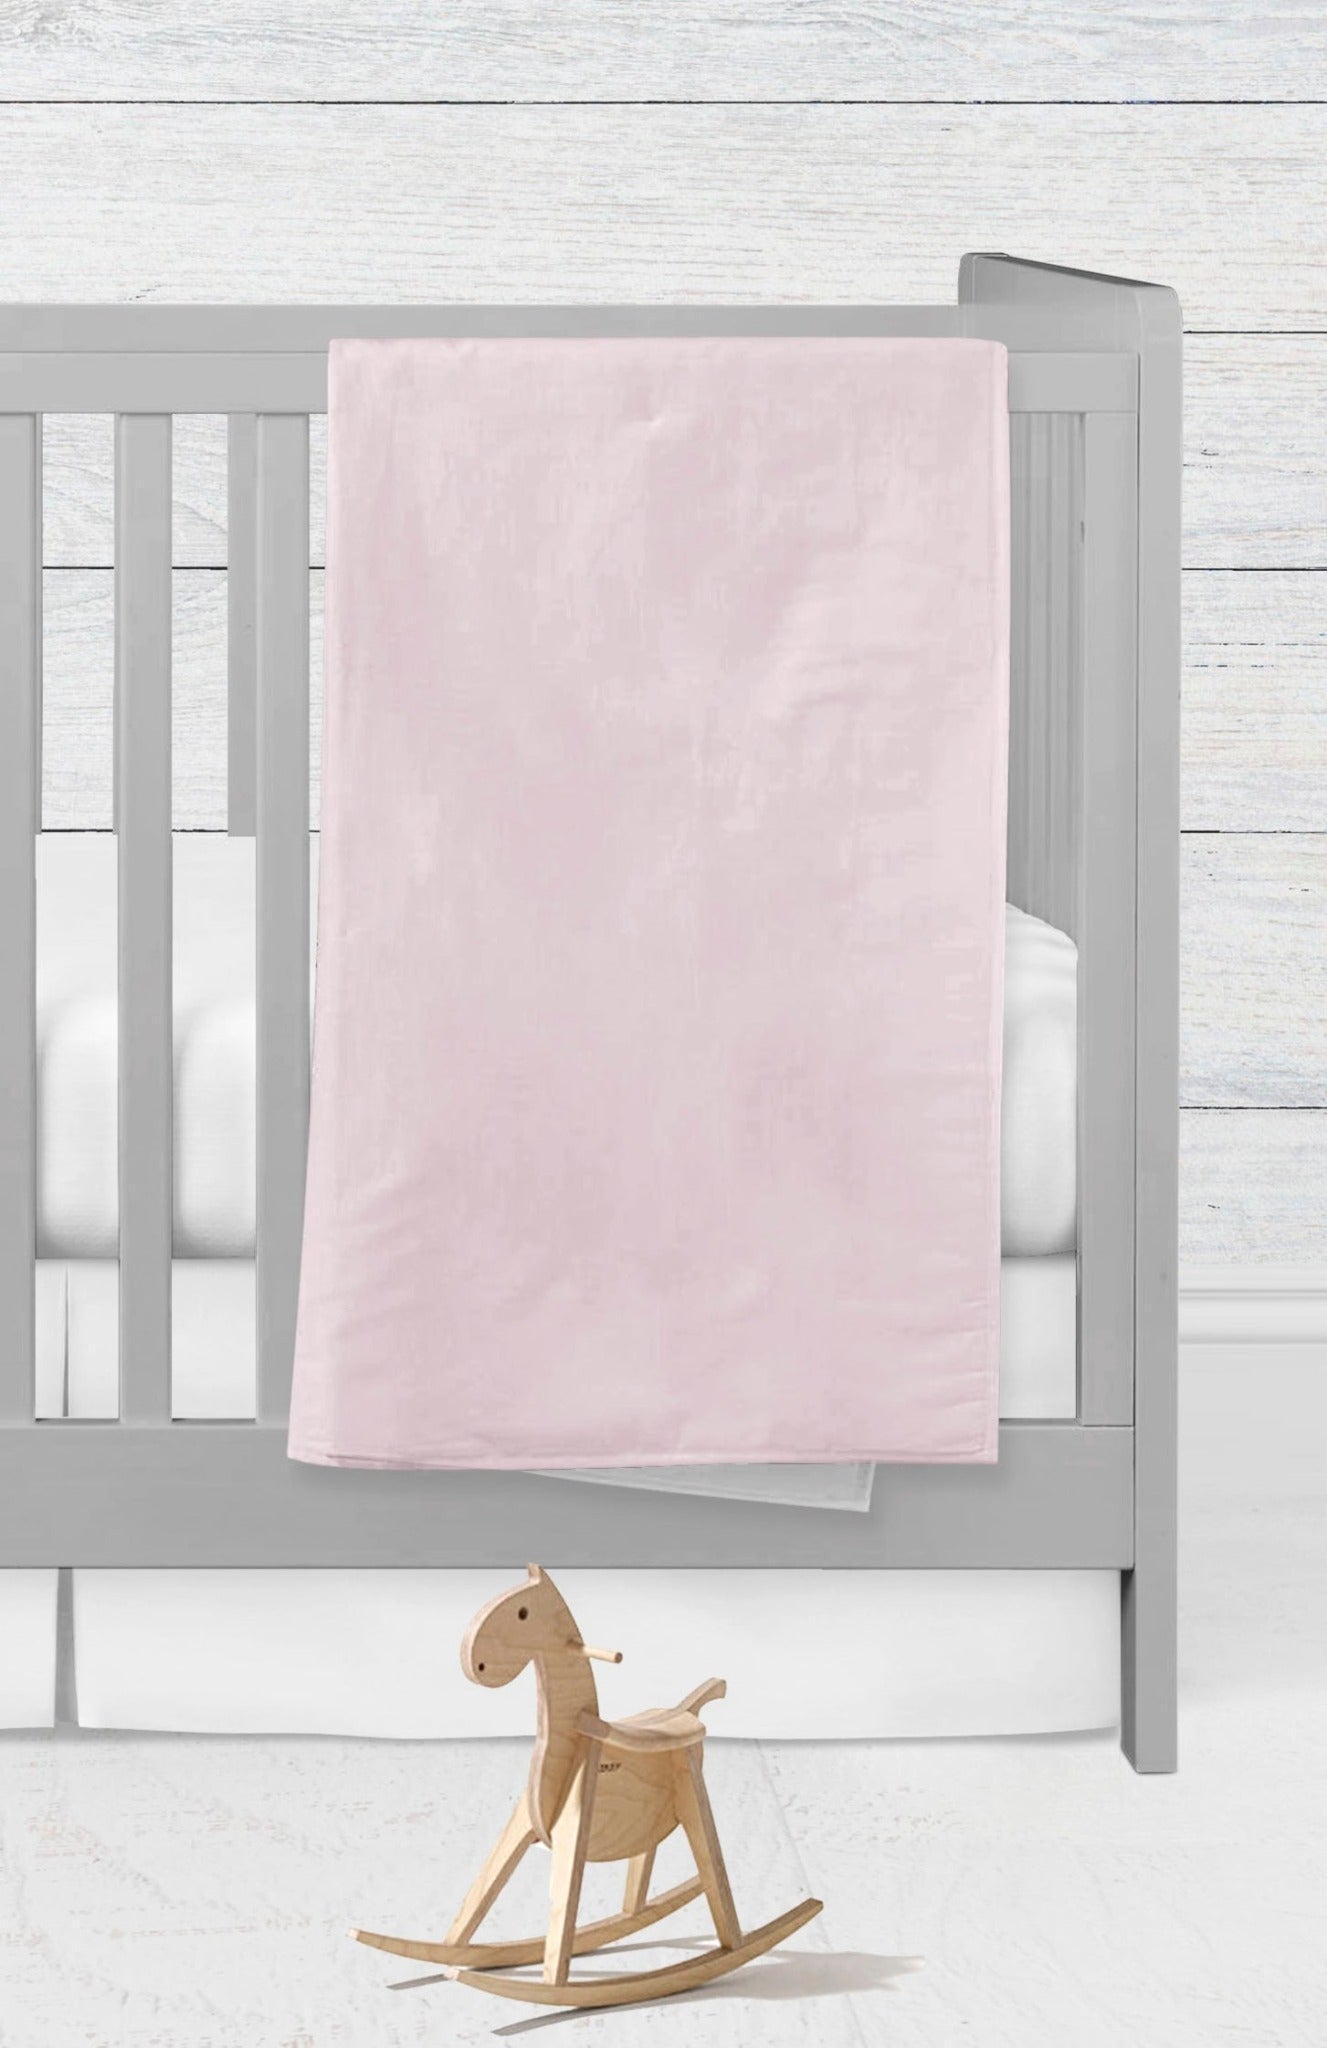 Mini Crib Bedding 3 - Piece Set, Pale Pink Nursery - The Creative Raccoon